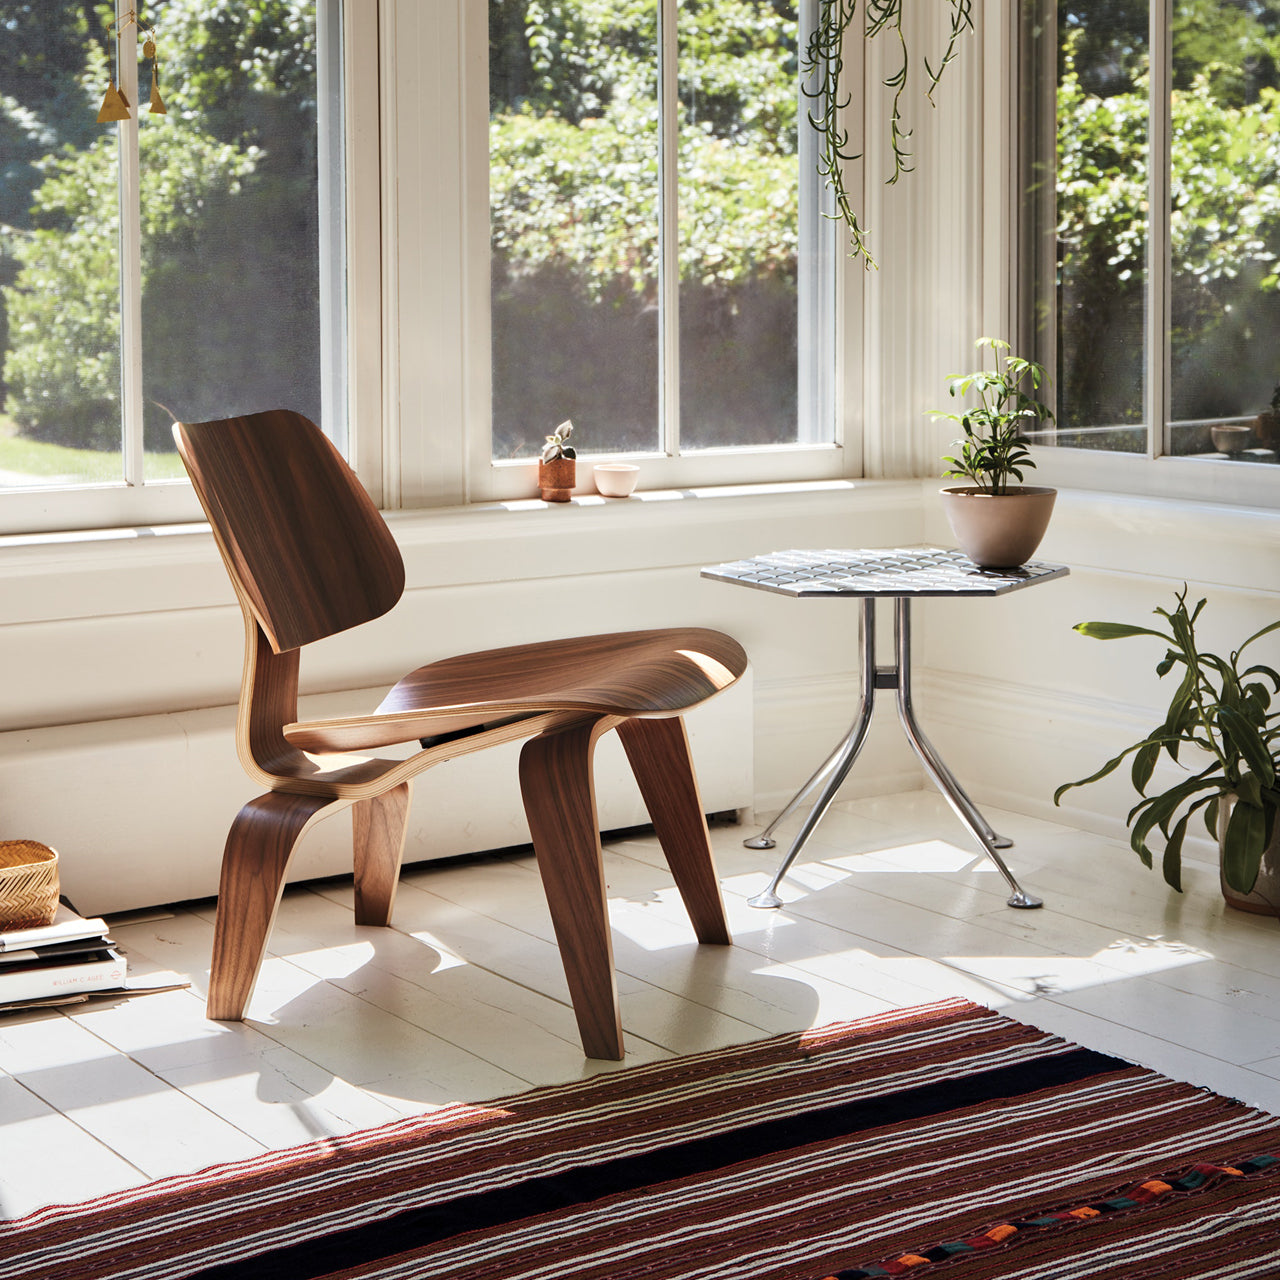 Eames Lounge Chair aus geformtem Sperrholz mit Holzgestell